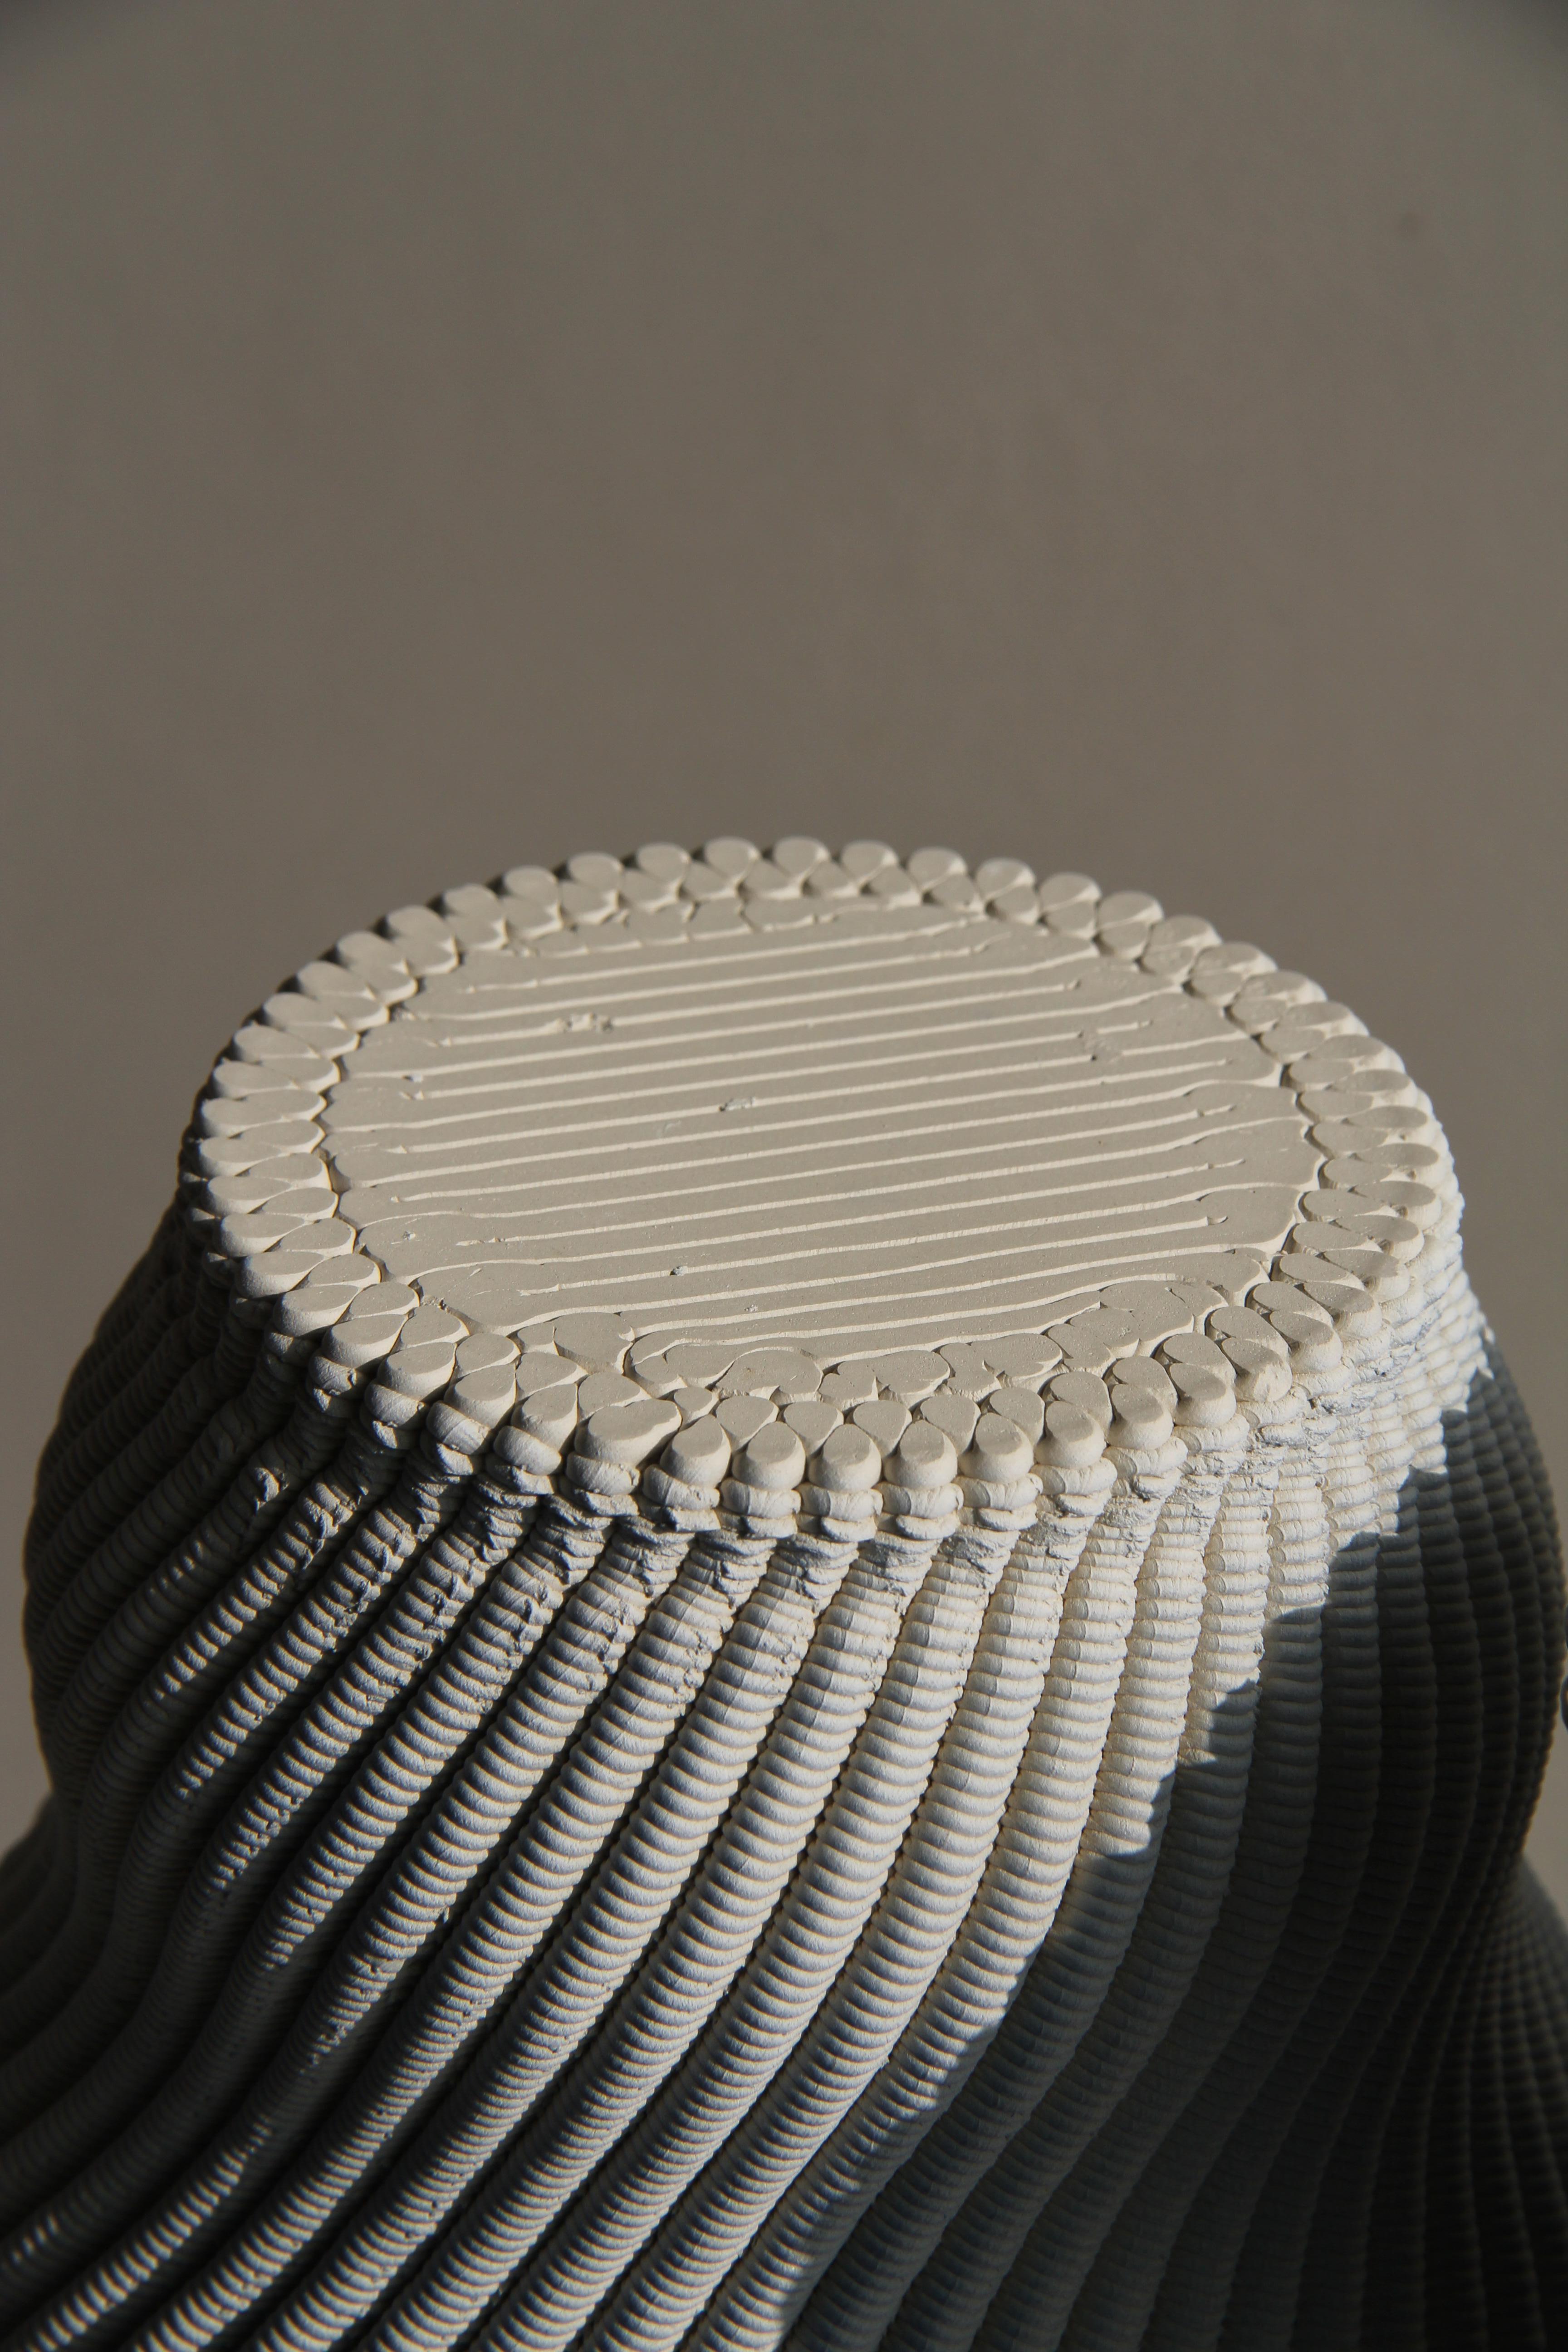 Gradient Blue 3D Printed Ceramic Tecla Vase Italy Contemporary 21st Century For Sale 4